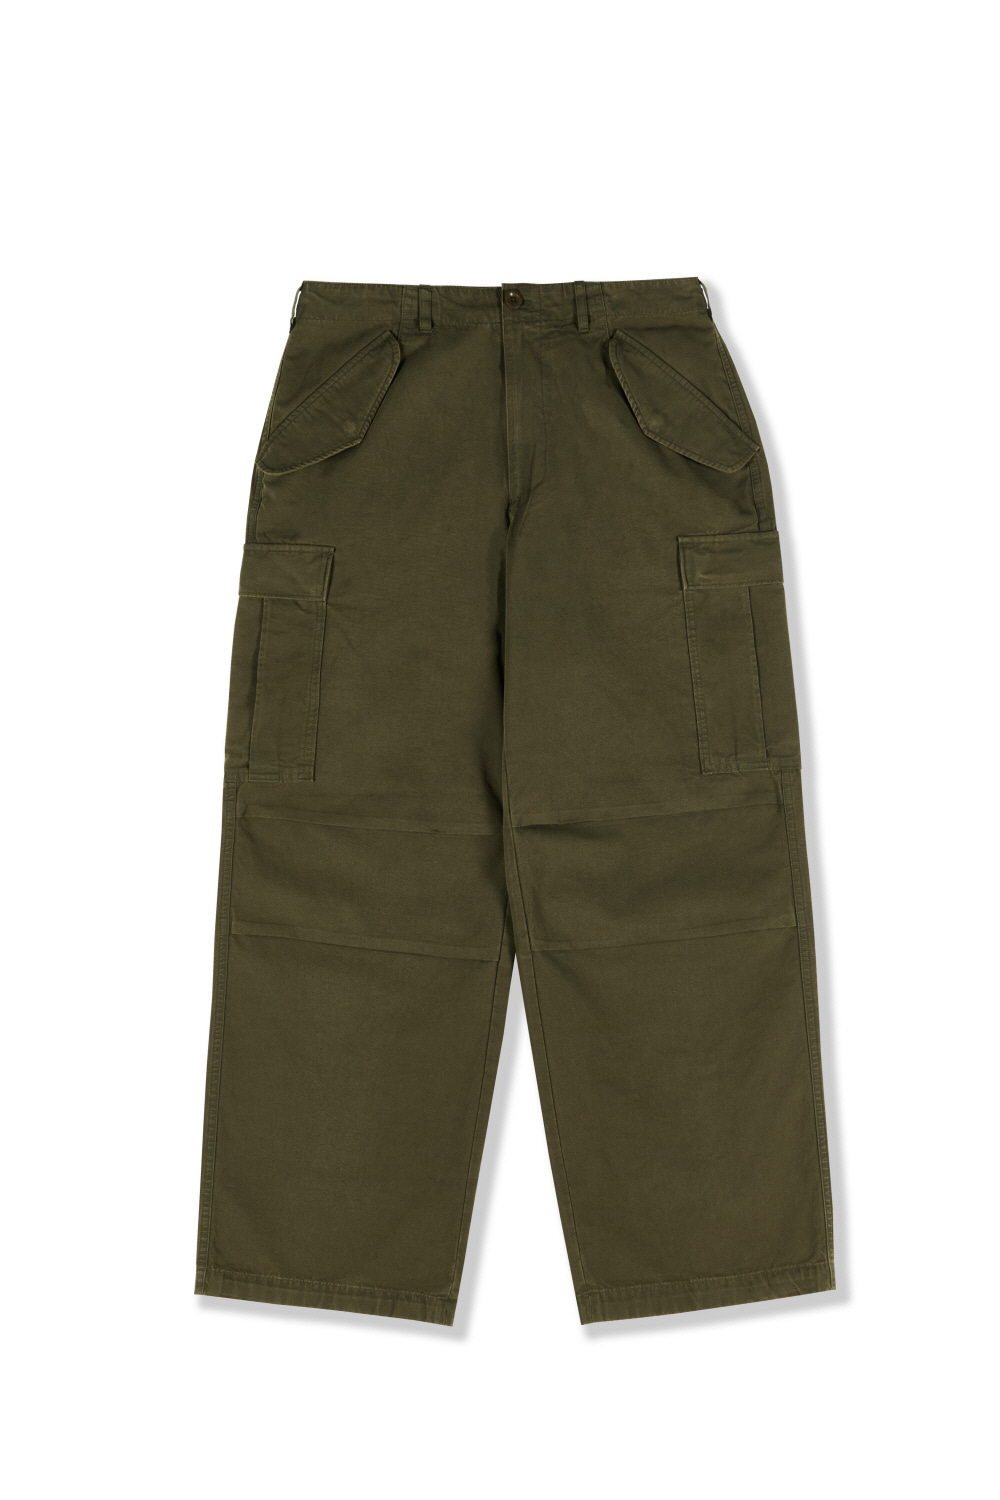 [24&#039;SS] M-65 pants_olive drab